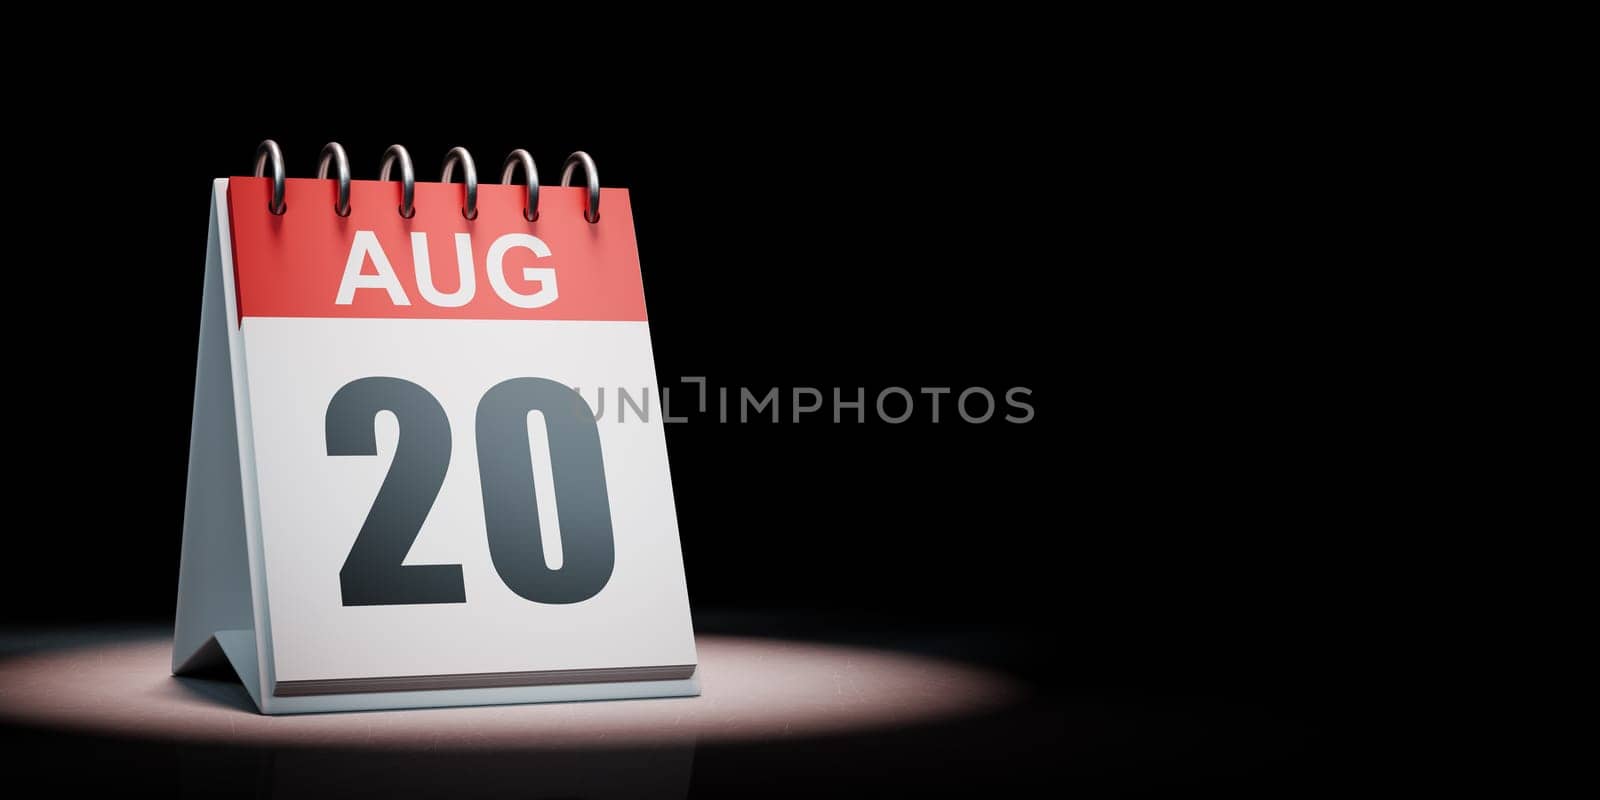 August 20 Calendar Spotlighted on Black Background by make